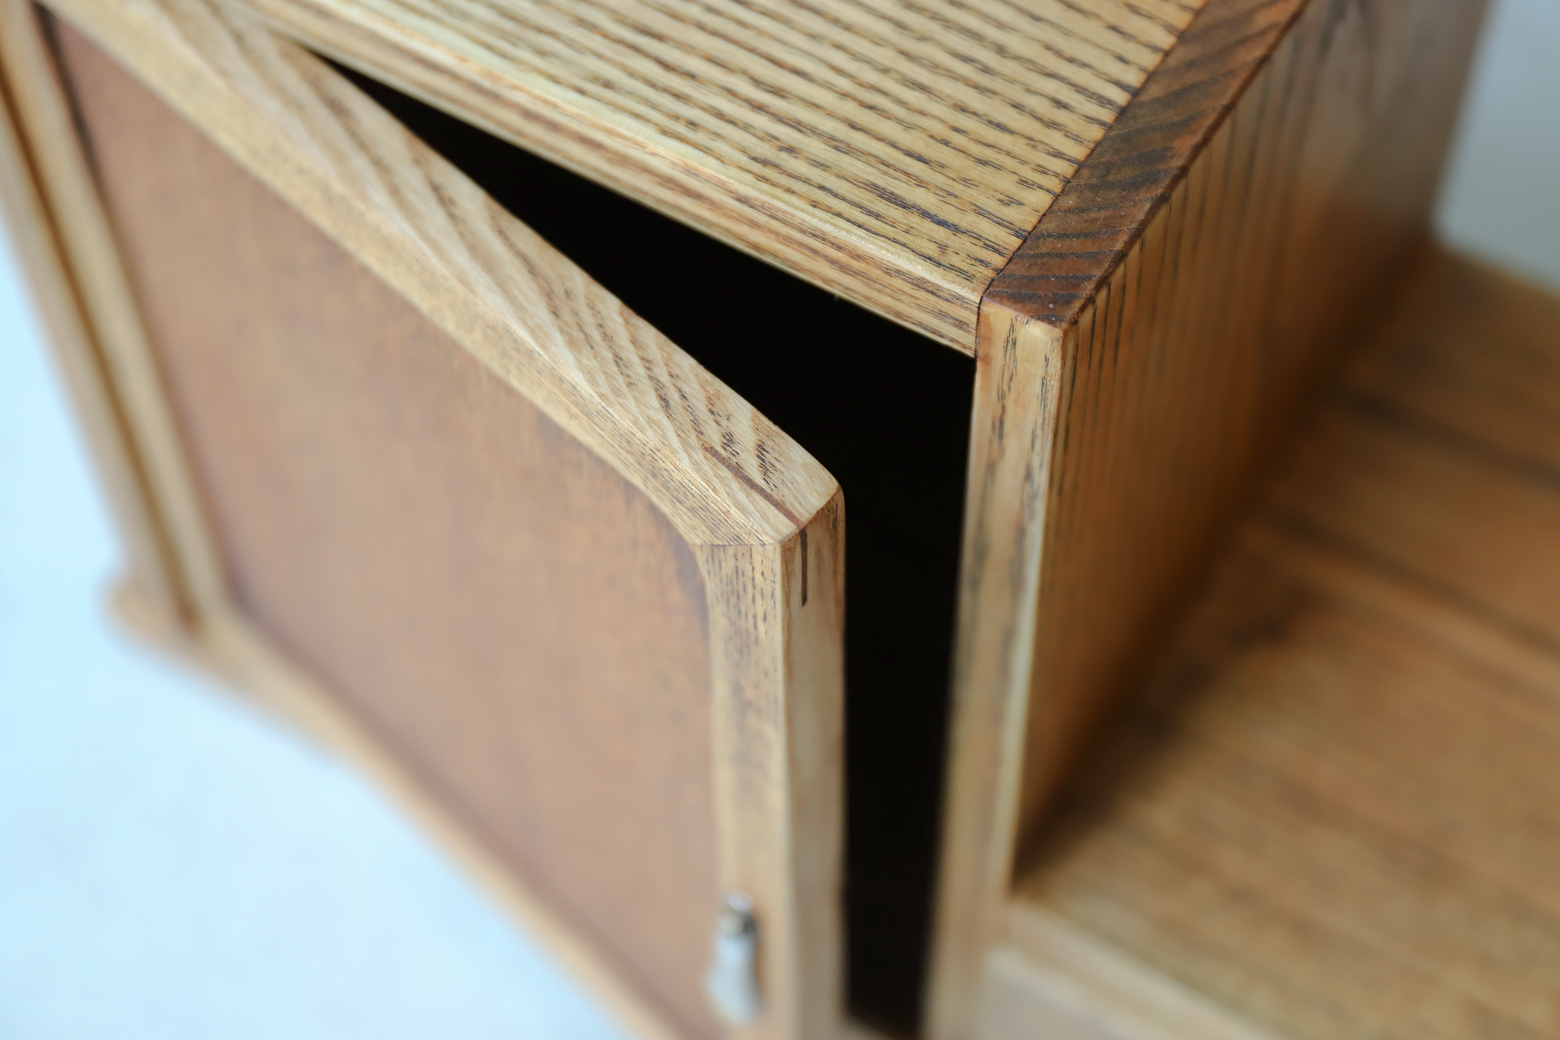 Japan Antique "Okidoko" floor chest/アンティーク 置き床 小引き出し 和 モダン 家具